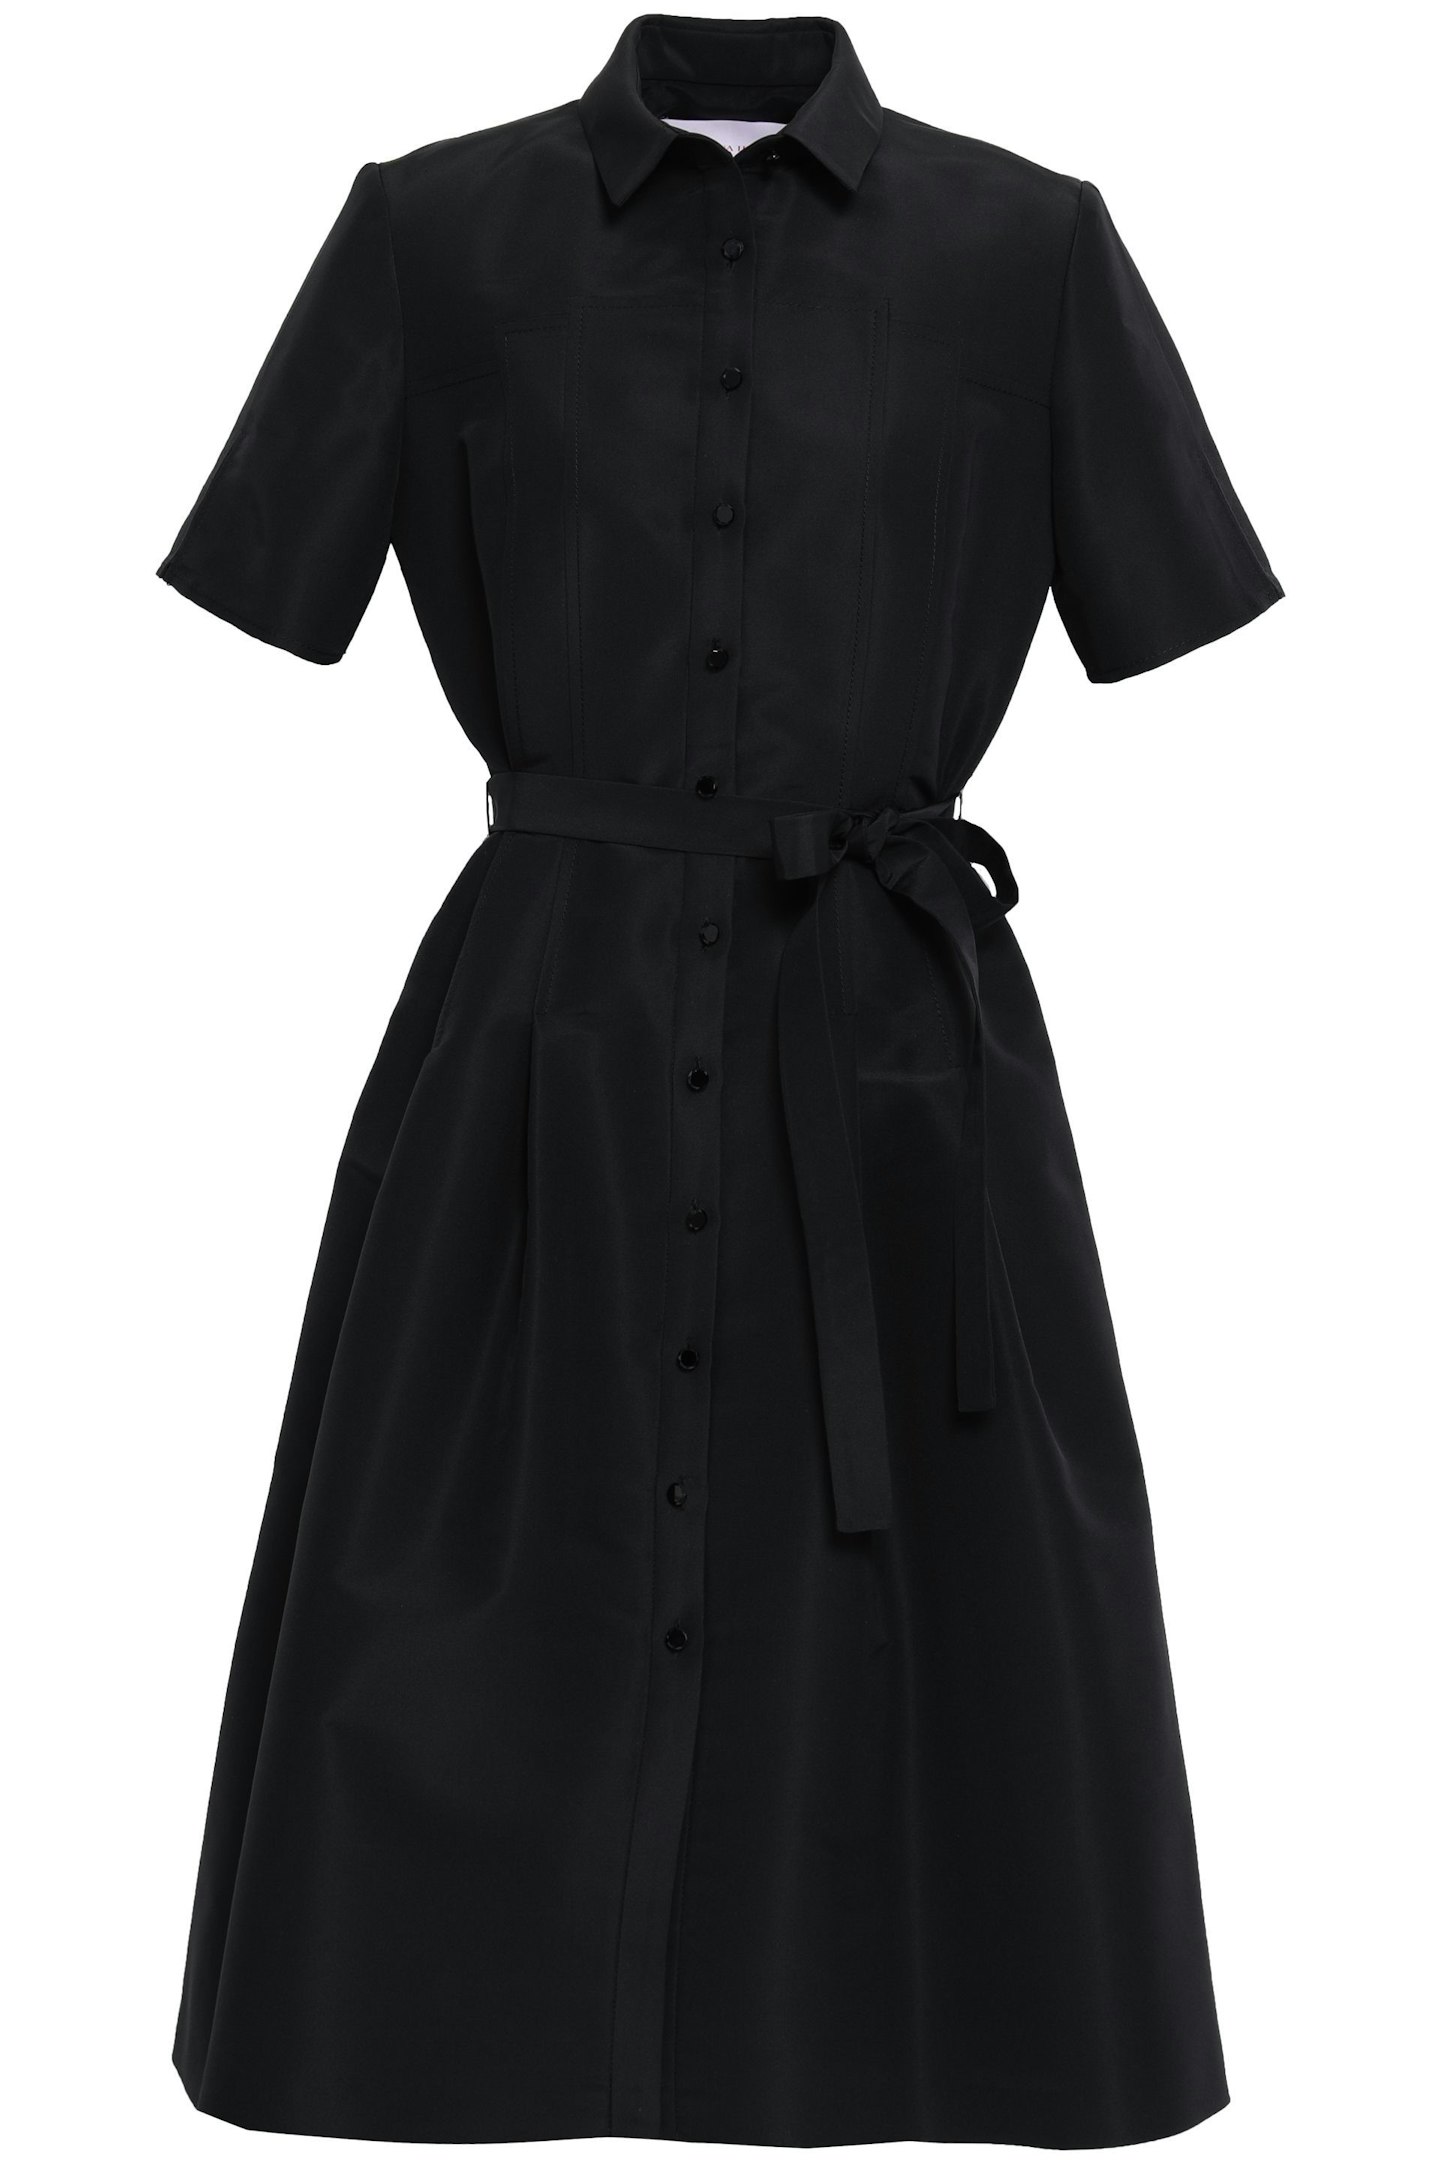 Carolina Herrera, Black Shirt Dress, £1,100